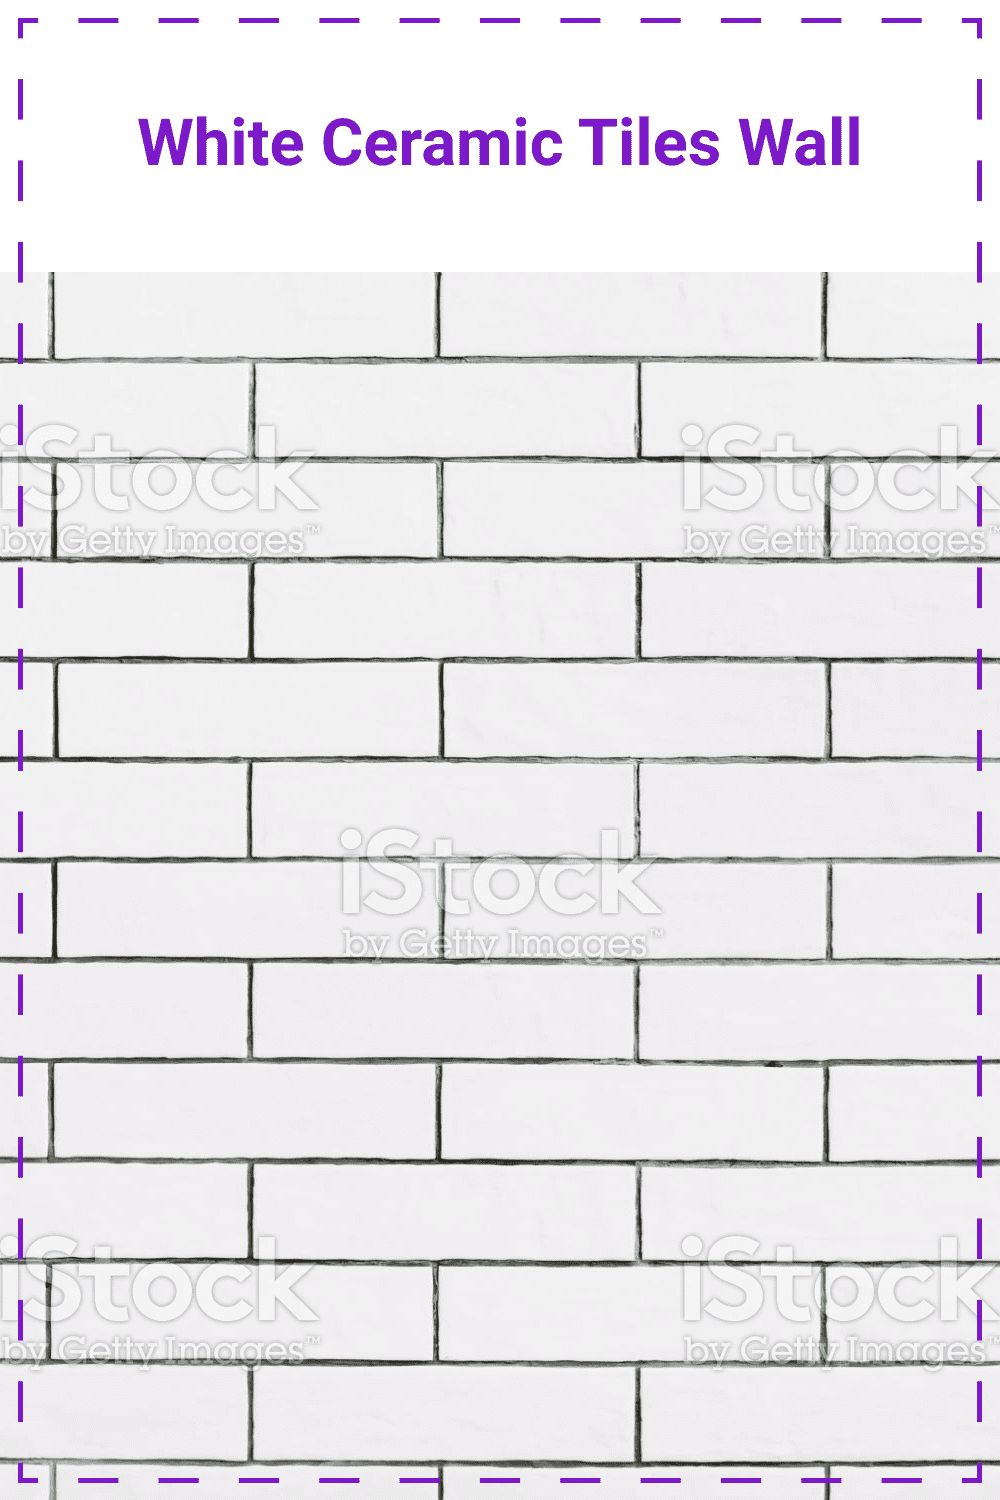 White ceramic tiles wall .